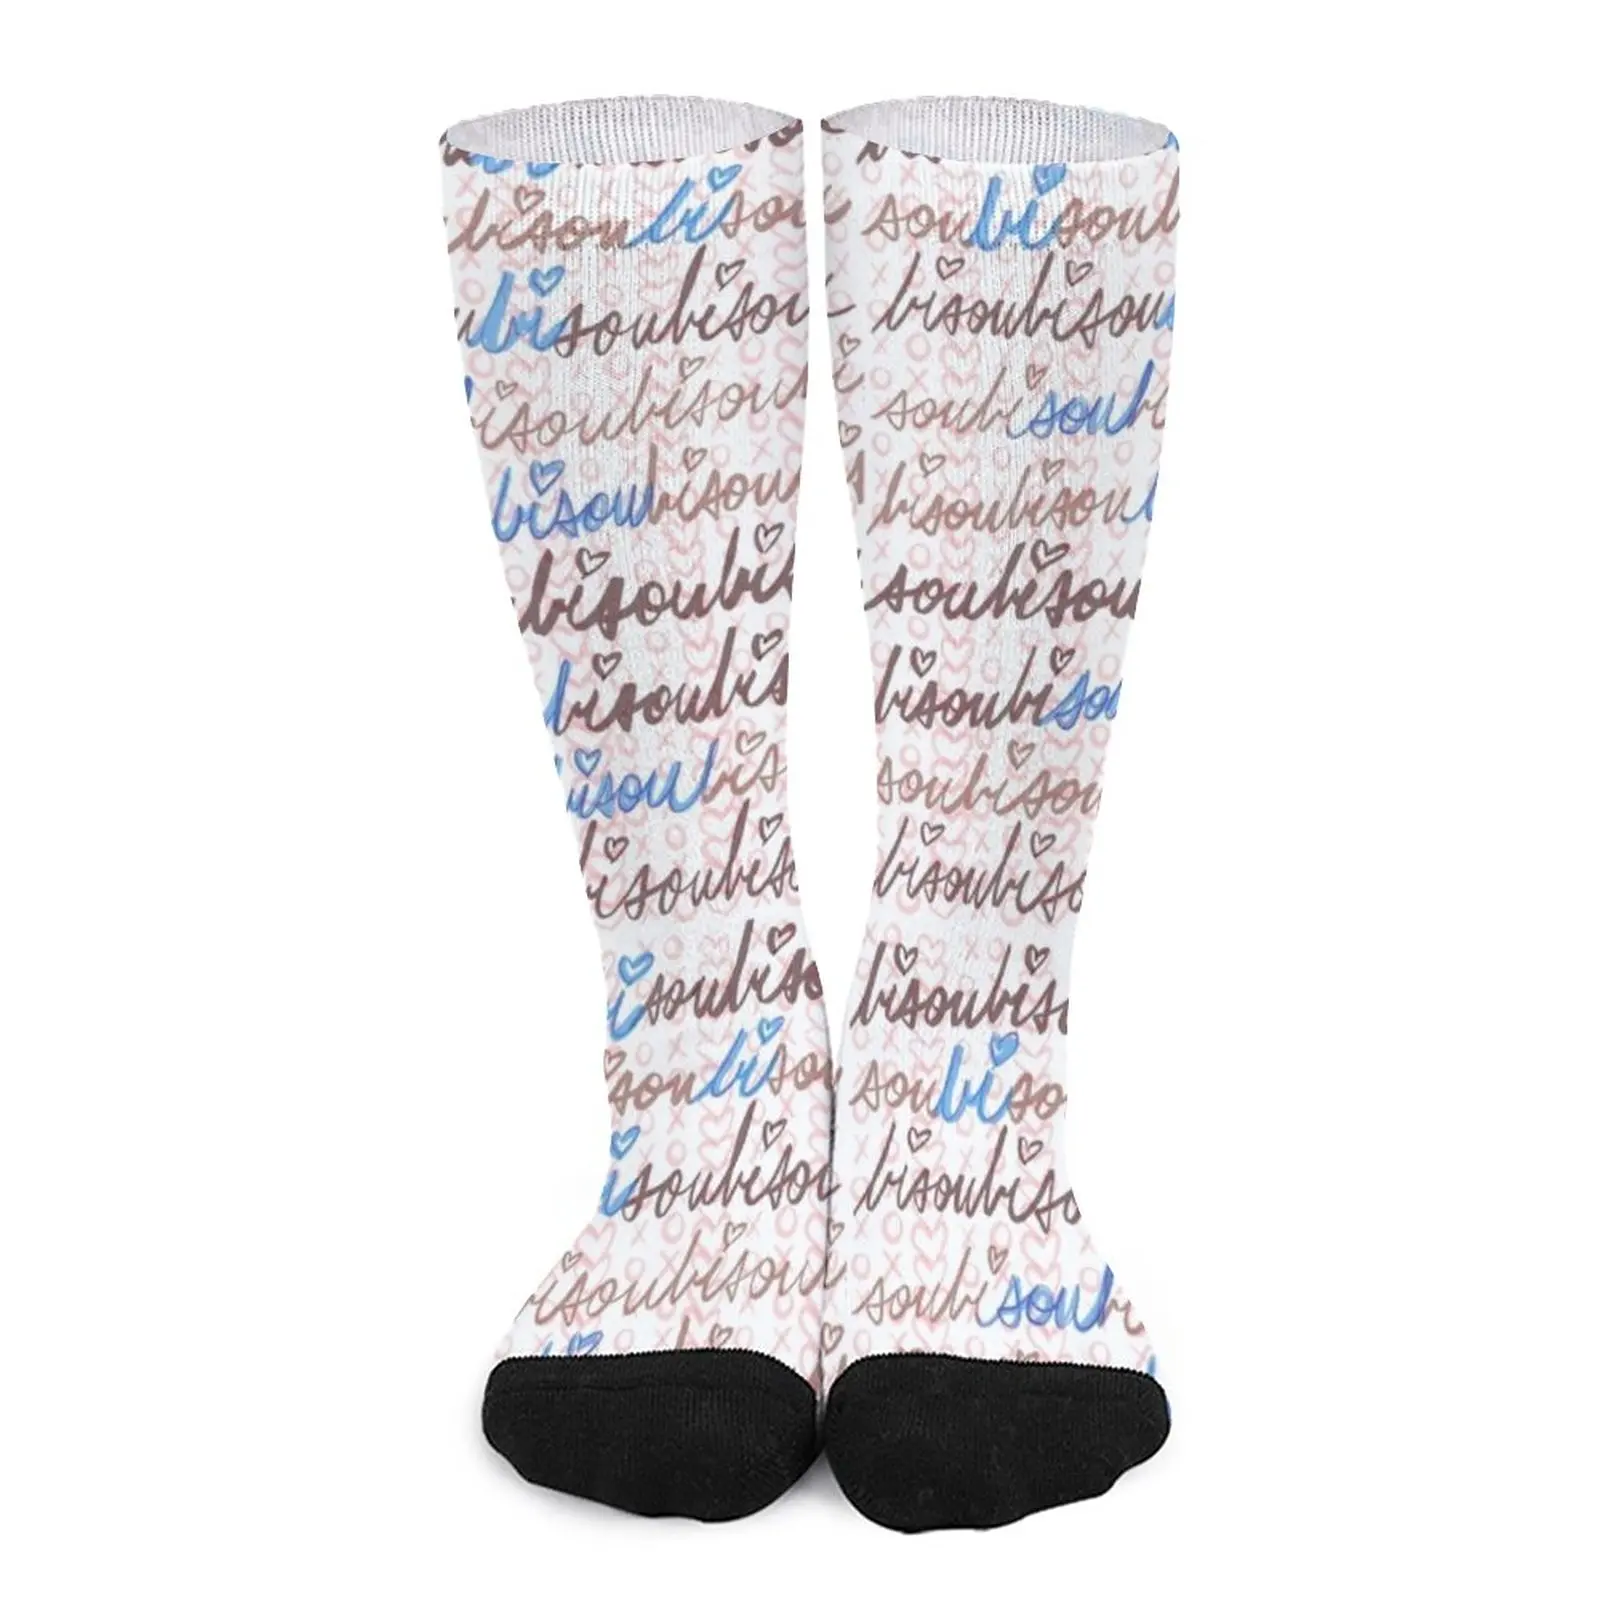 Bi Soul Bisou Blue and Brown Socks Stockings Argentina funny socks for Women смартфон bq bq 6051g soul 1 16gb blue